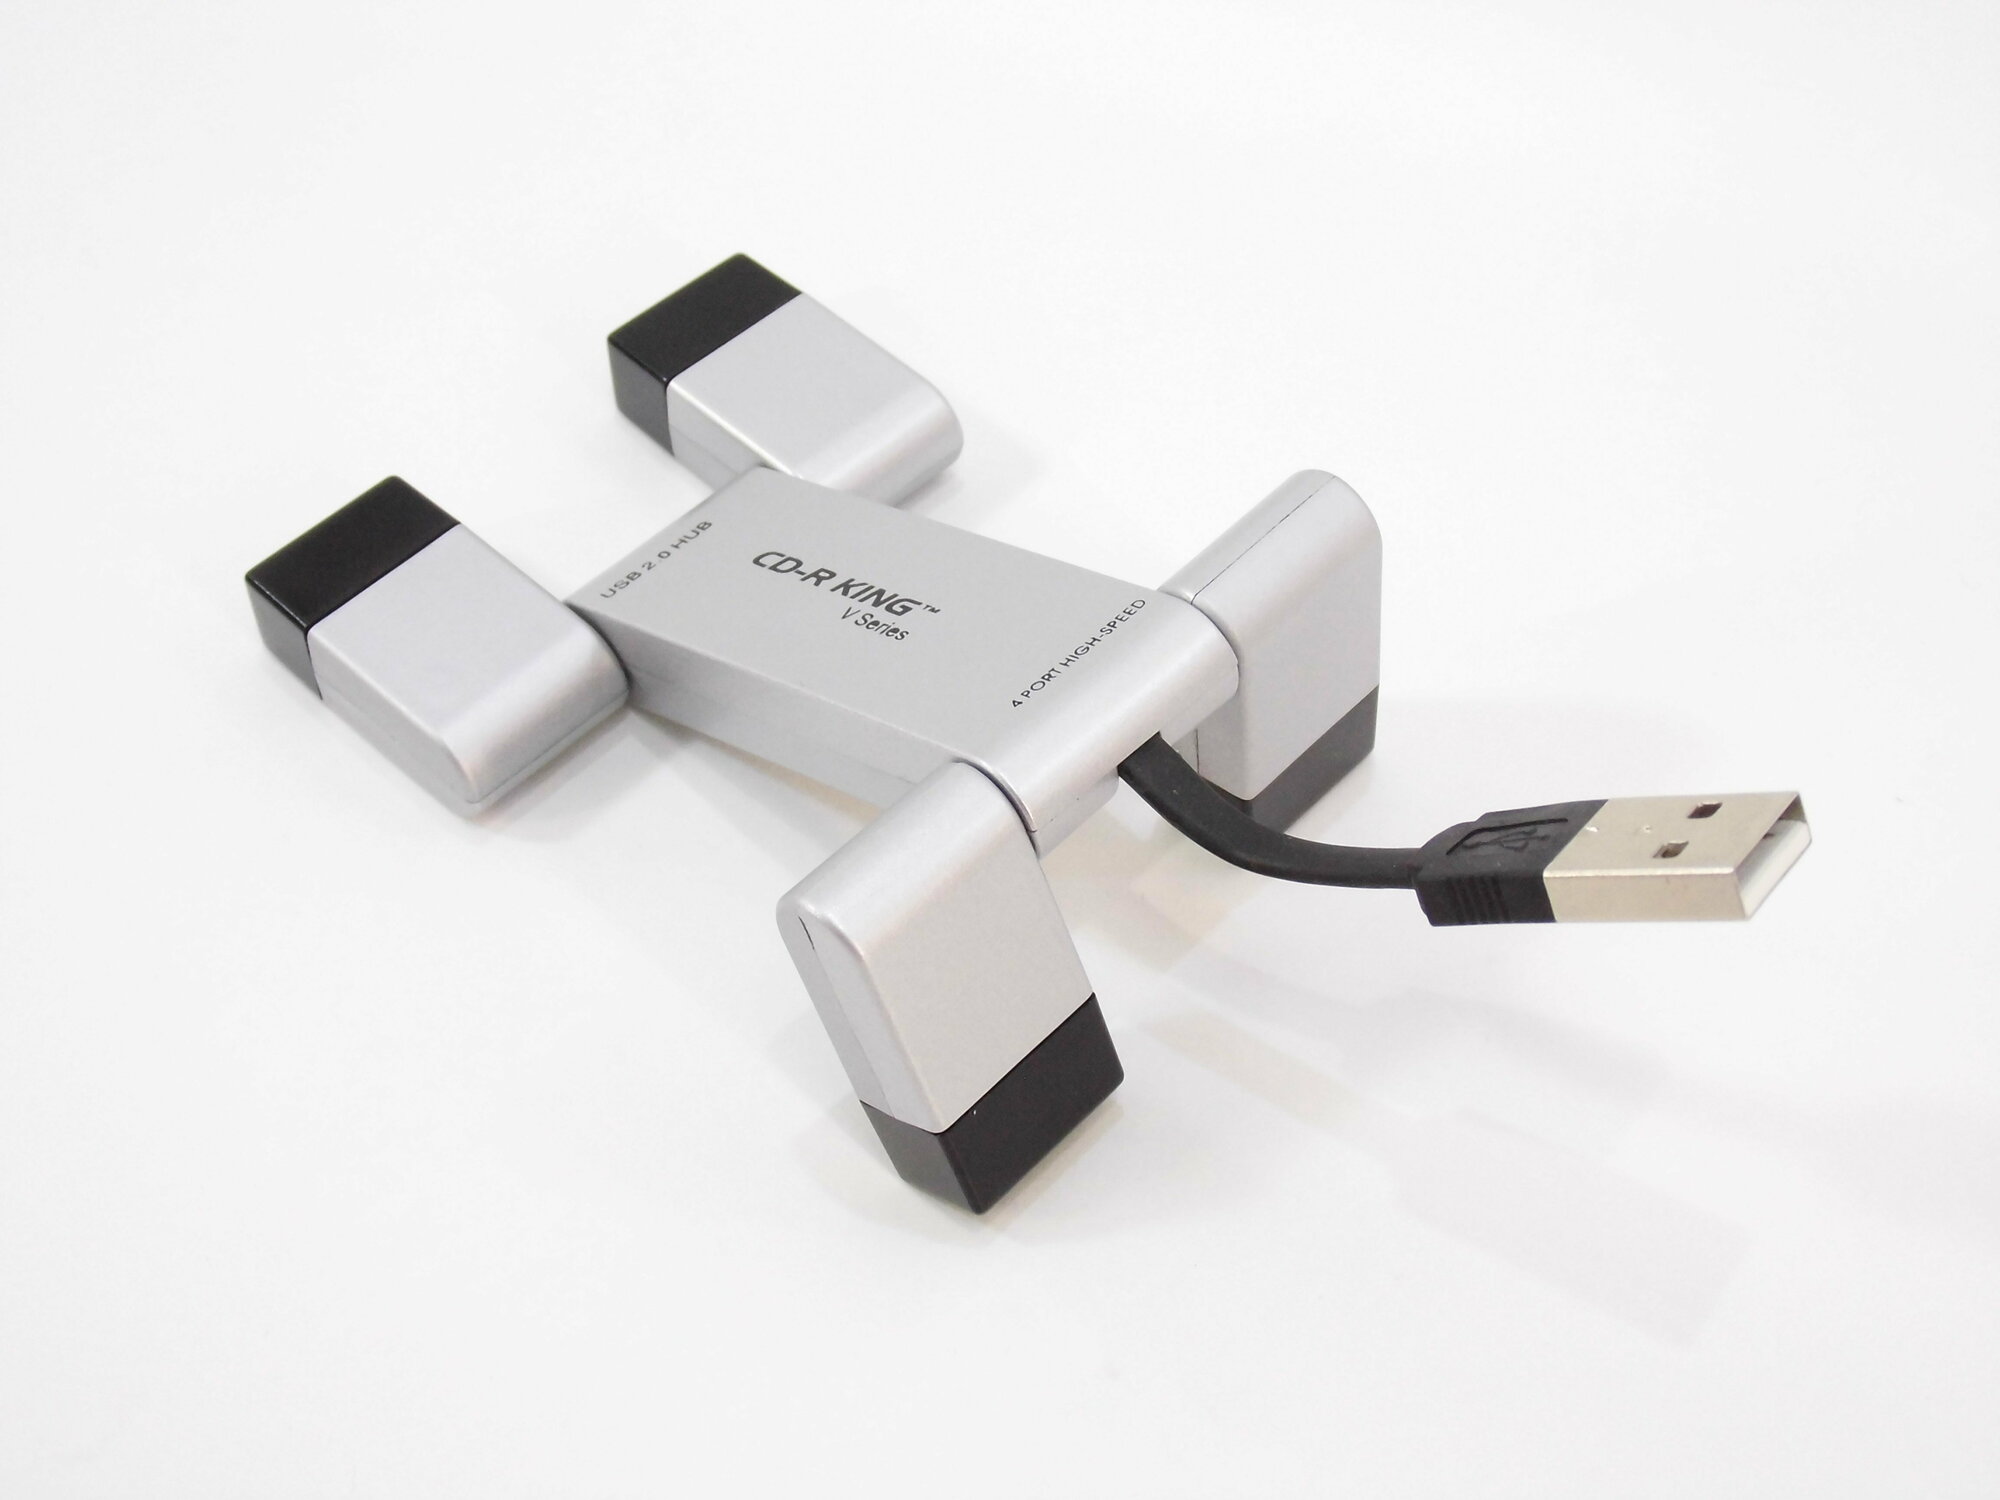 USB-концентратор USB-хаб HB-28 Трансформер 4 порта USB